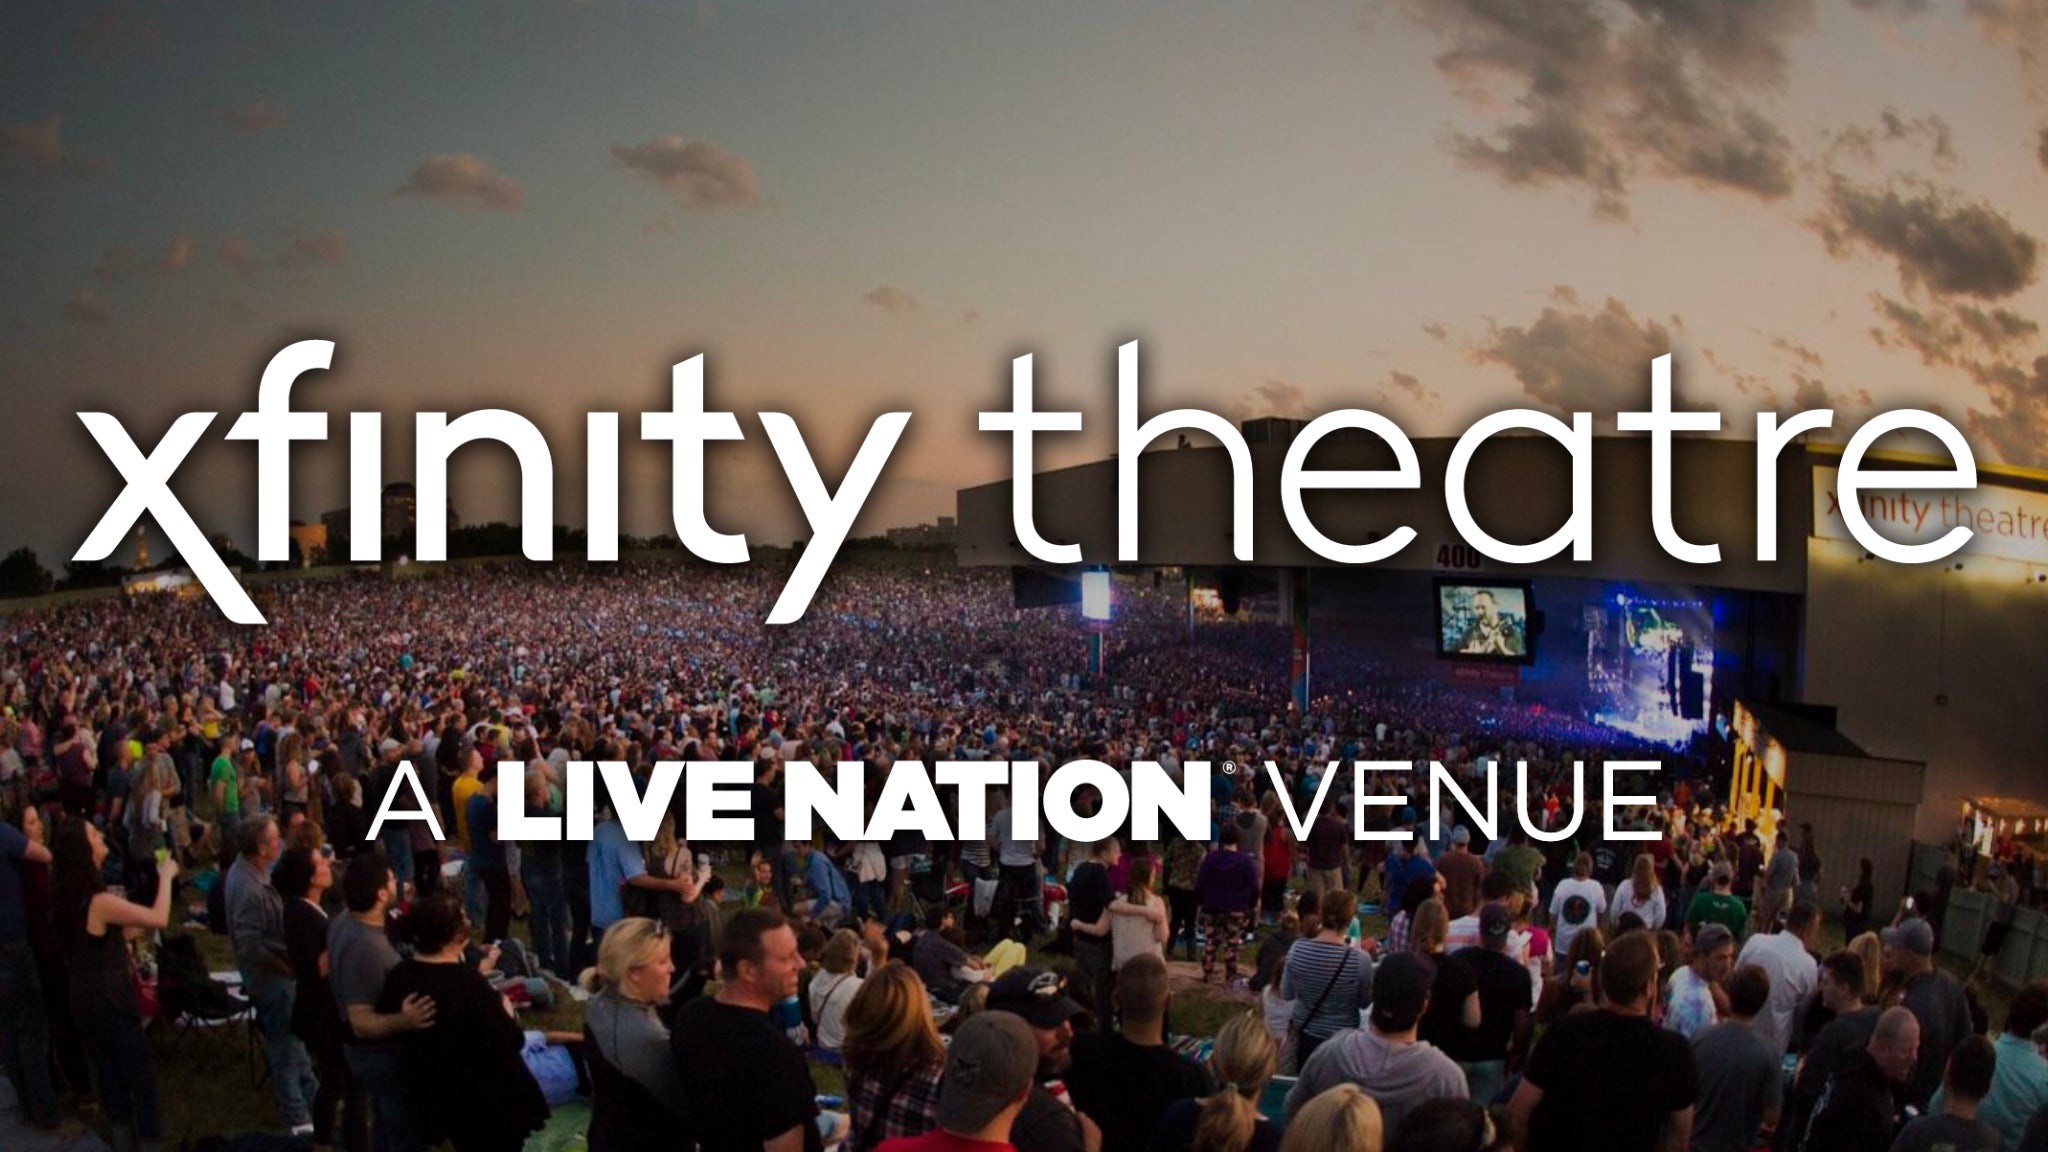 XFINITY Theatre 2020 show schedule & venue information Live Nation